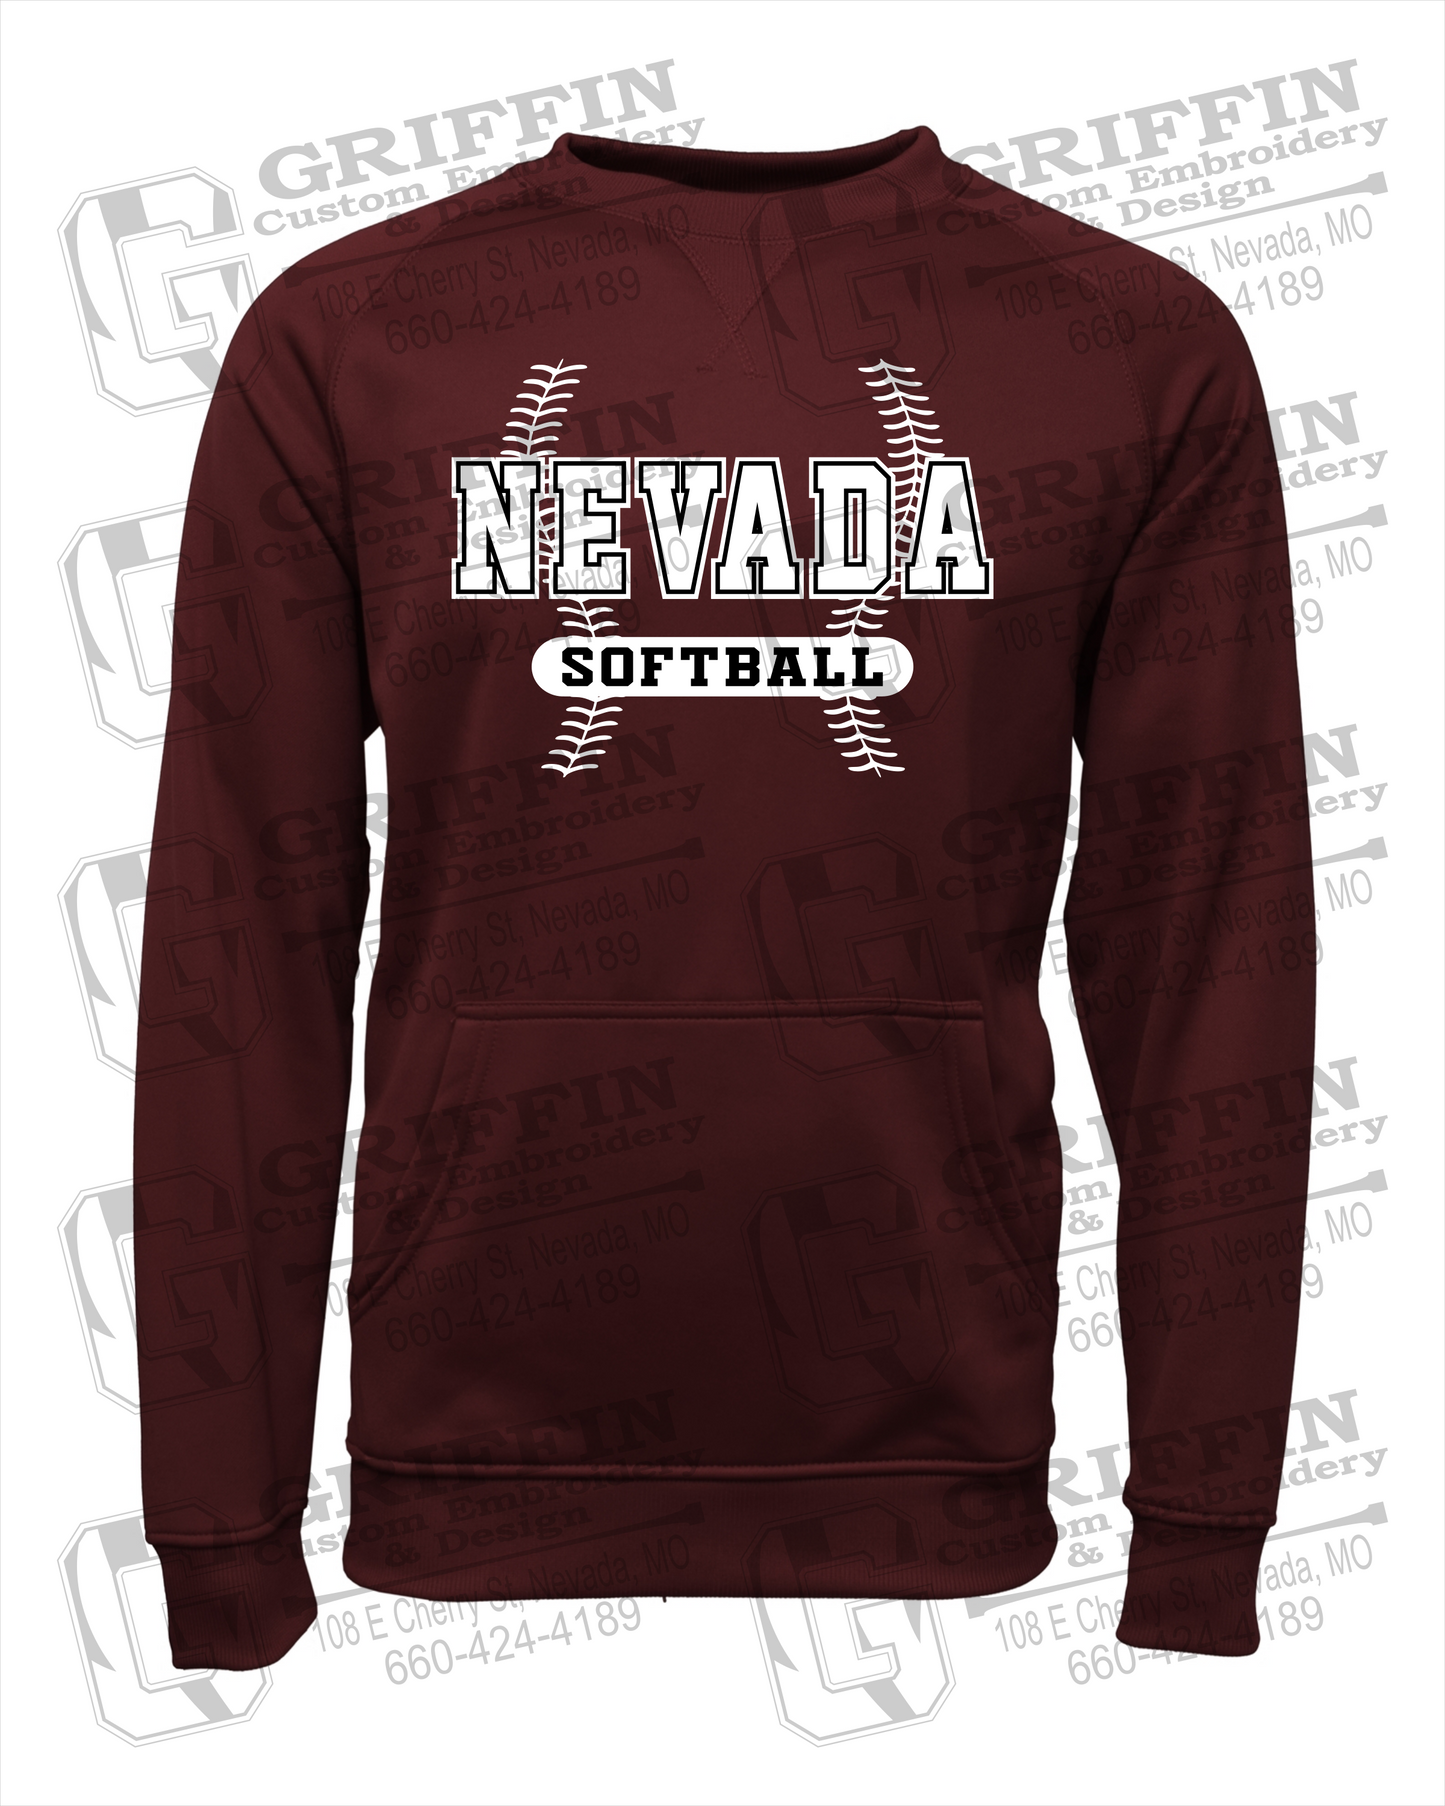 Nevada Tigers 24-E Youth Sweatshirt - Softball